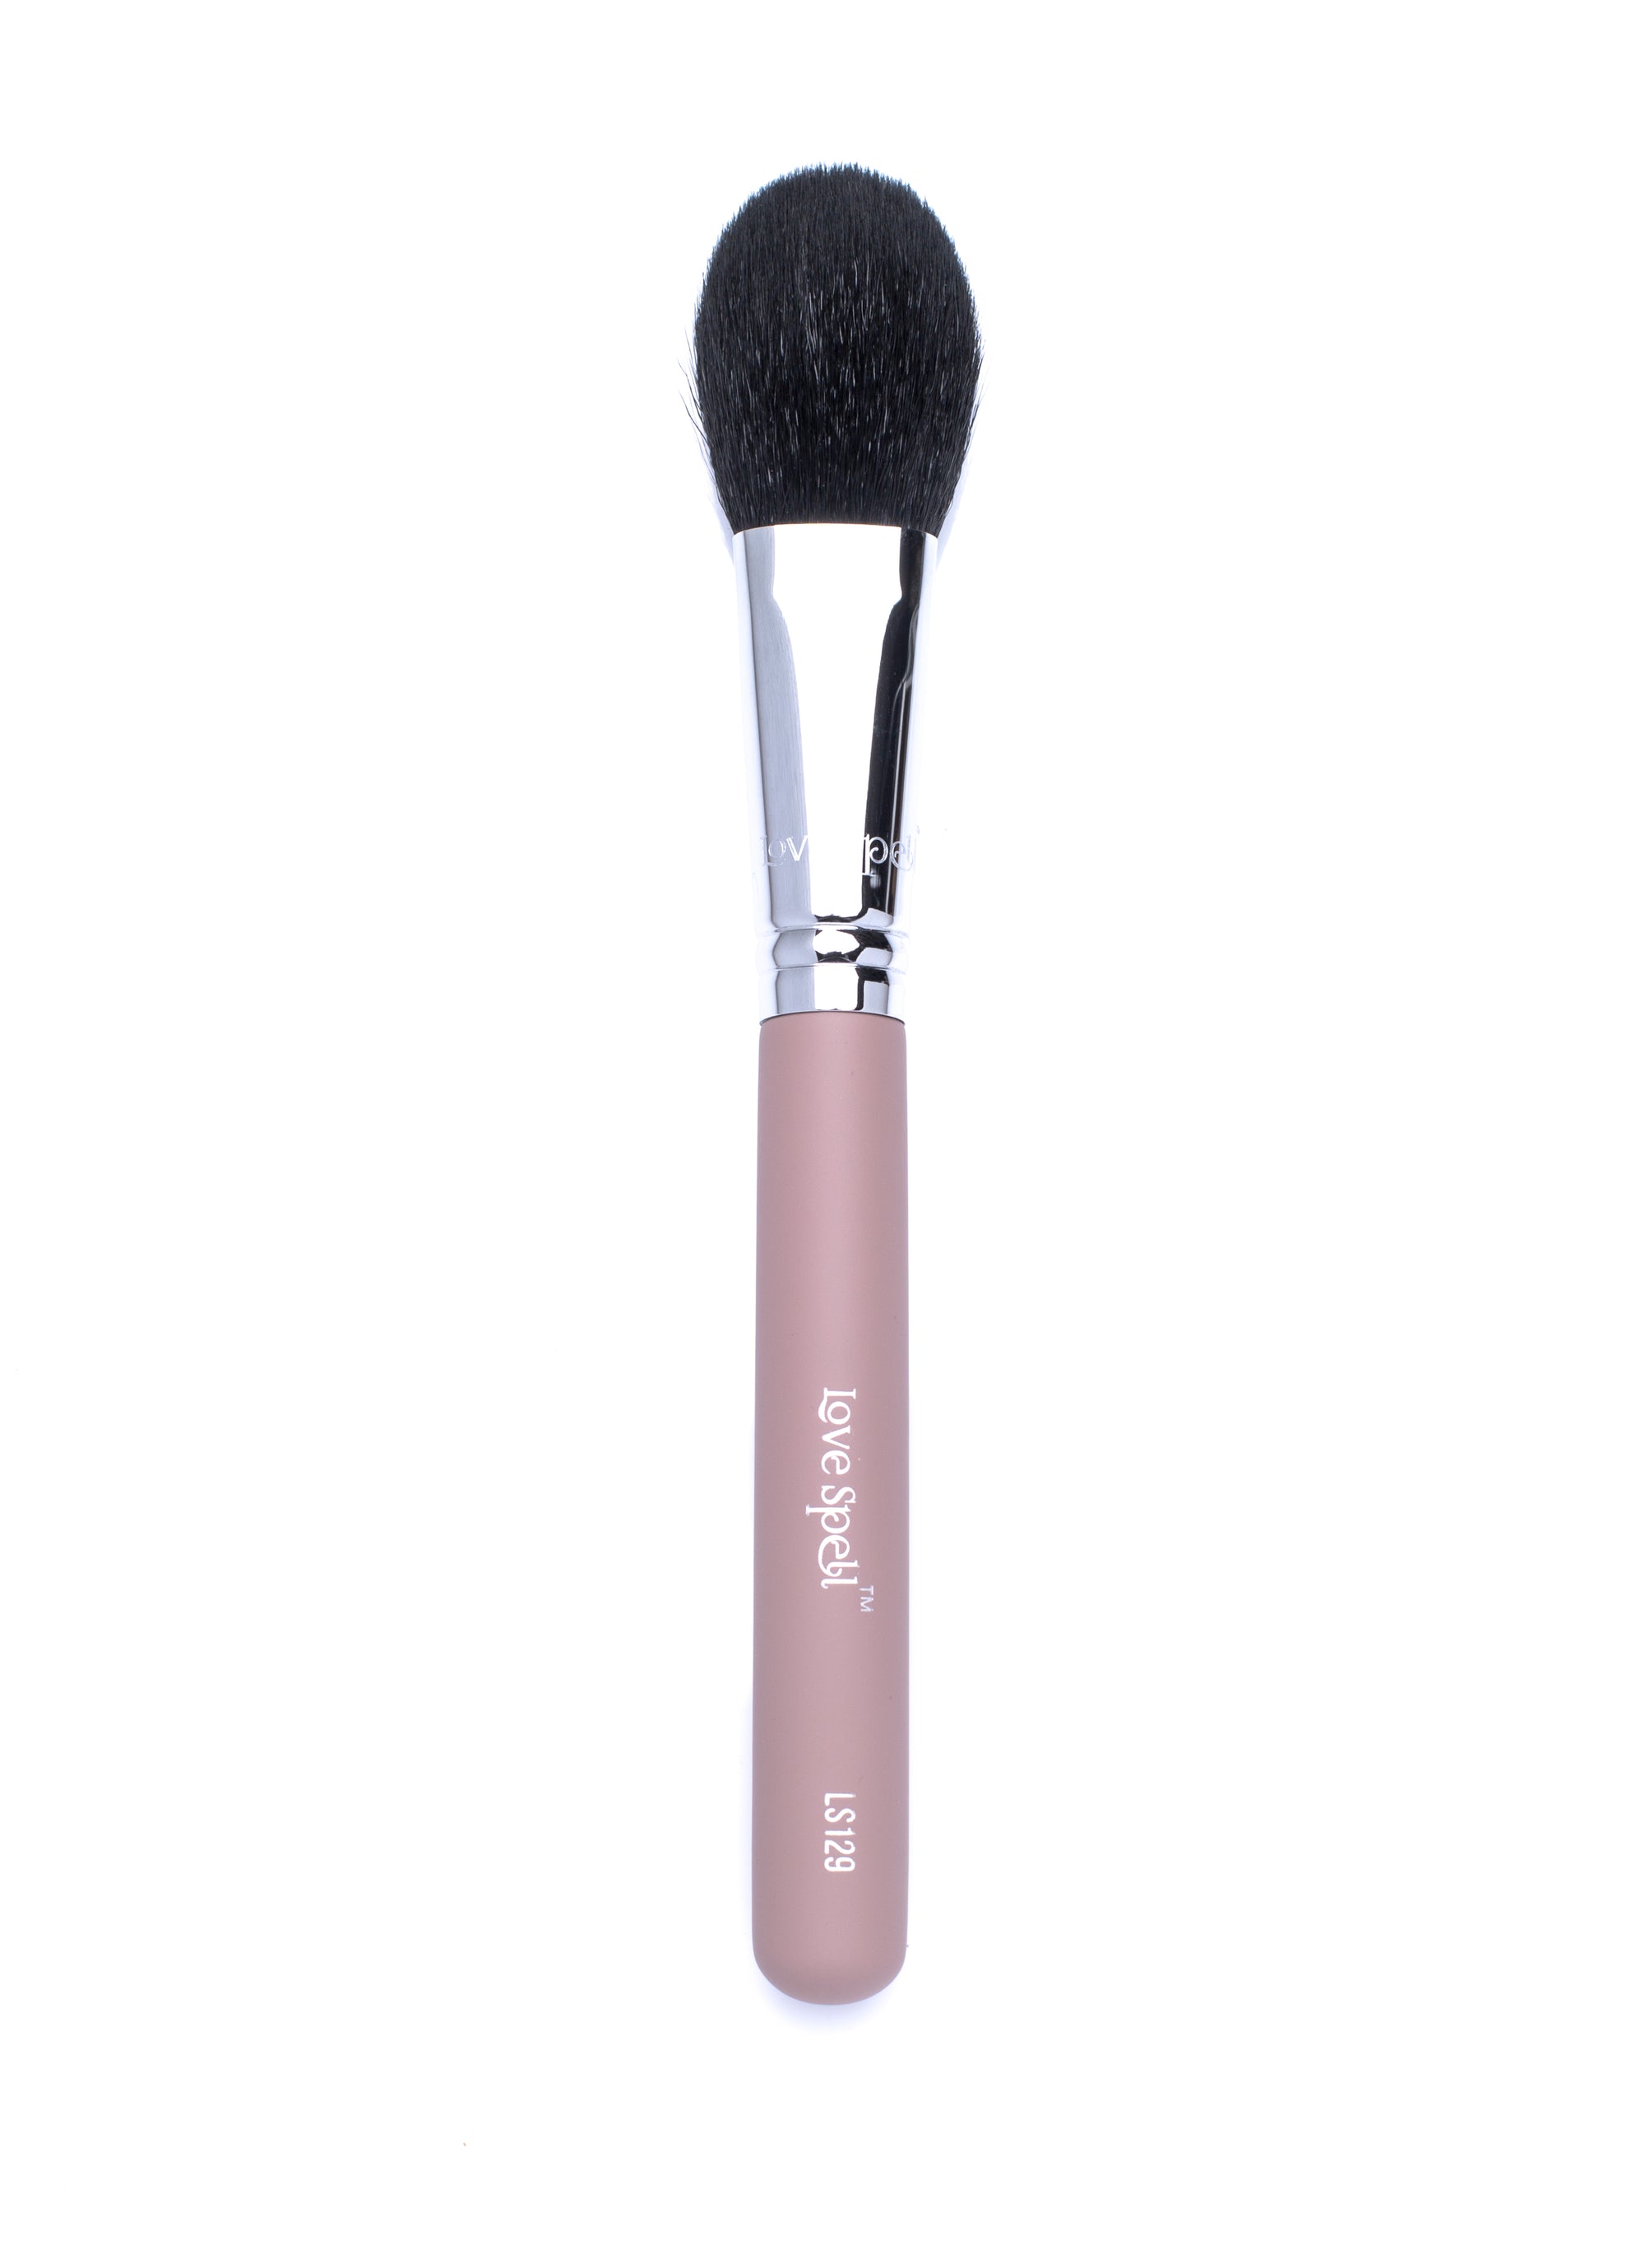 Sally's Spell - LS 129 medium blush brush